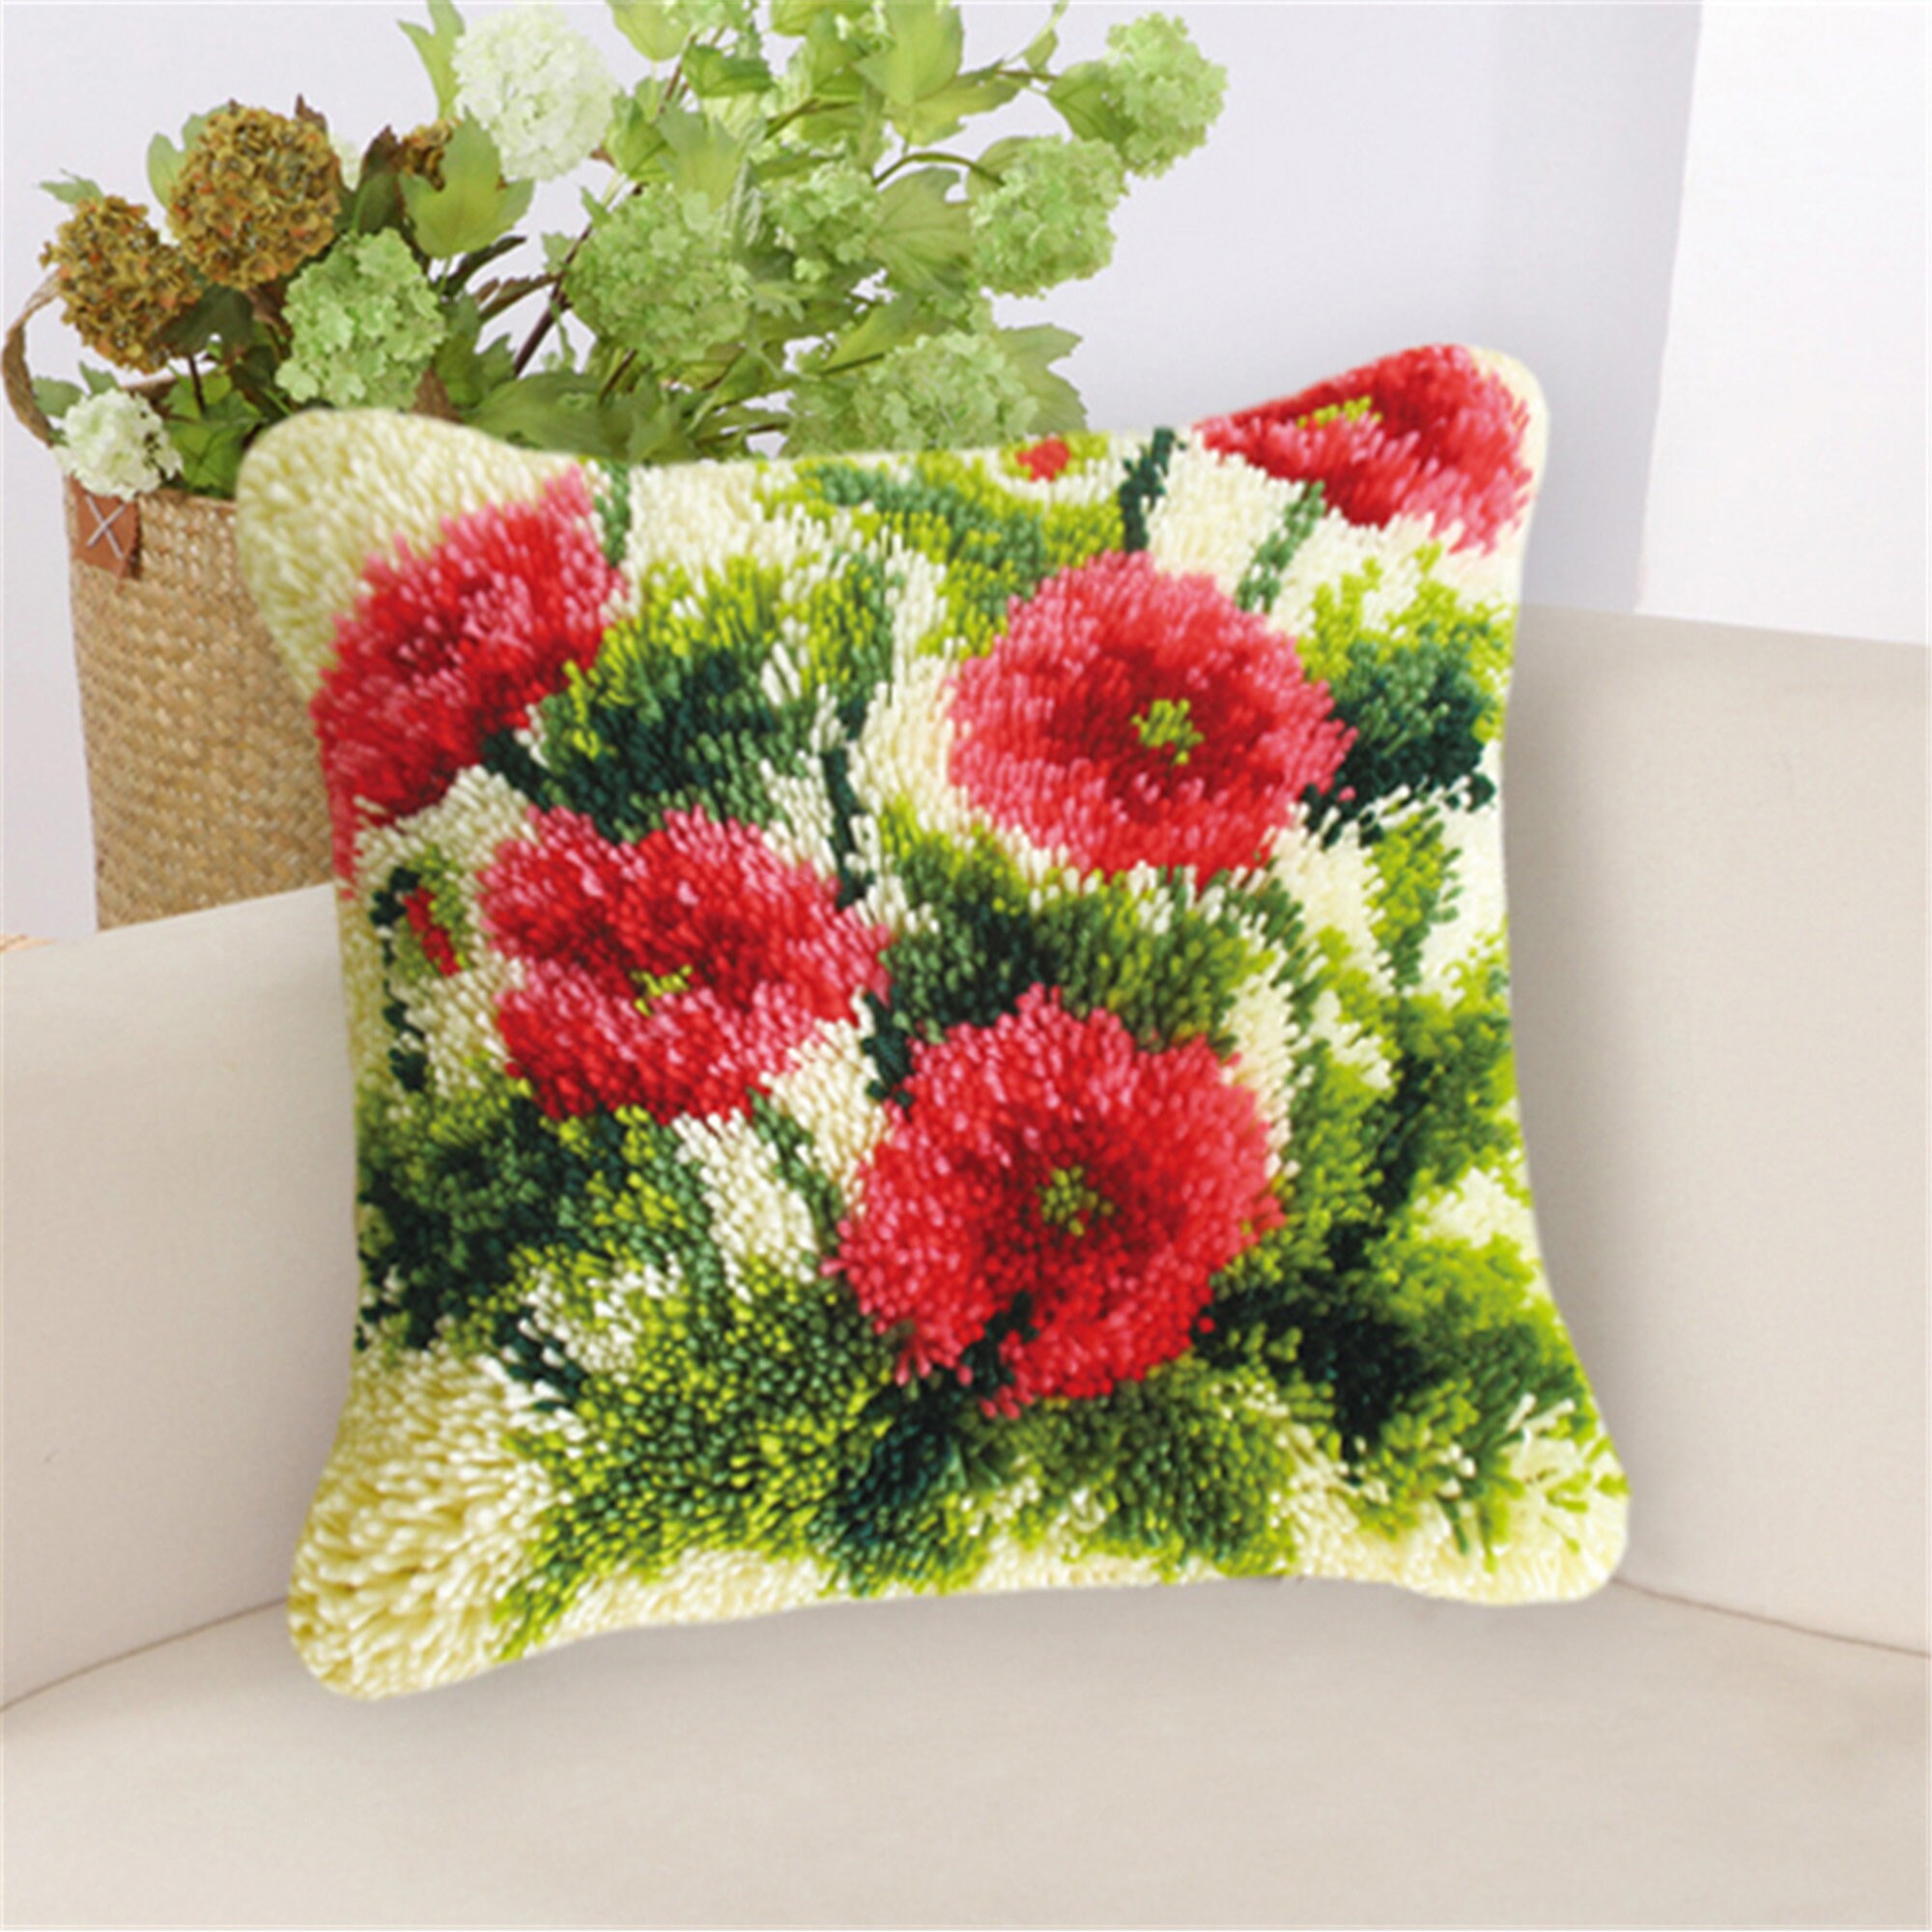 Bonarty Flower Model Latch Hook Kit Floral Cushion Cover DIY Craft Needlework Crocheting Cushion Embroidery 16 x 16 inch 